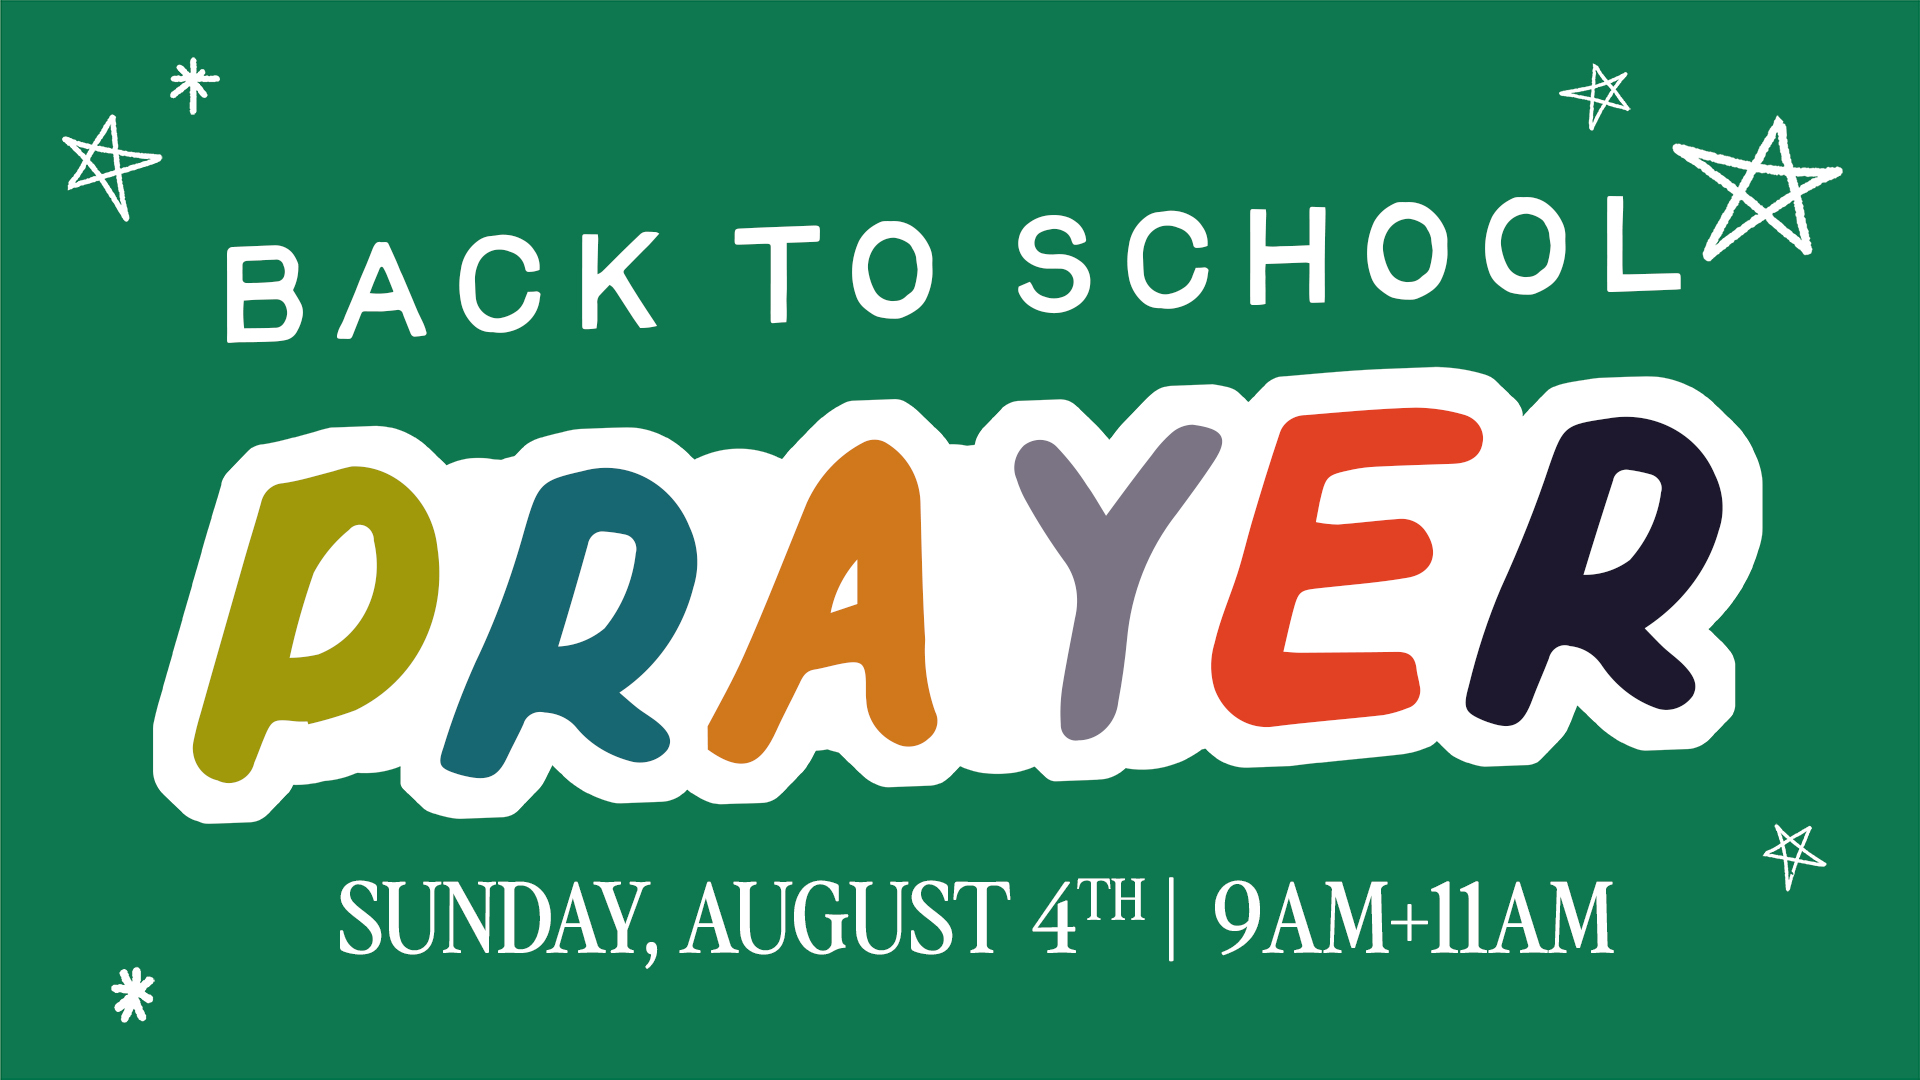 Back to School Prayer at the Alpharetta campus